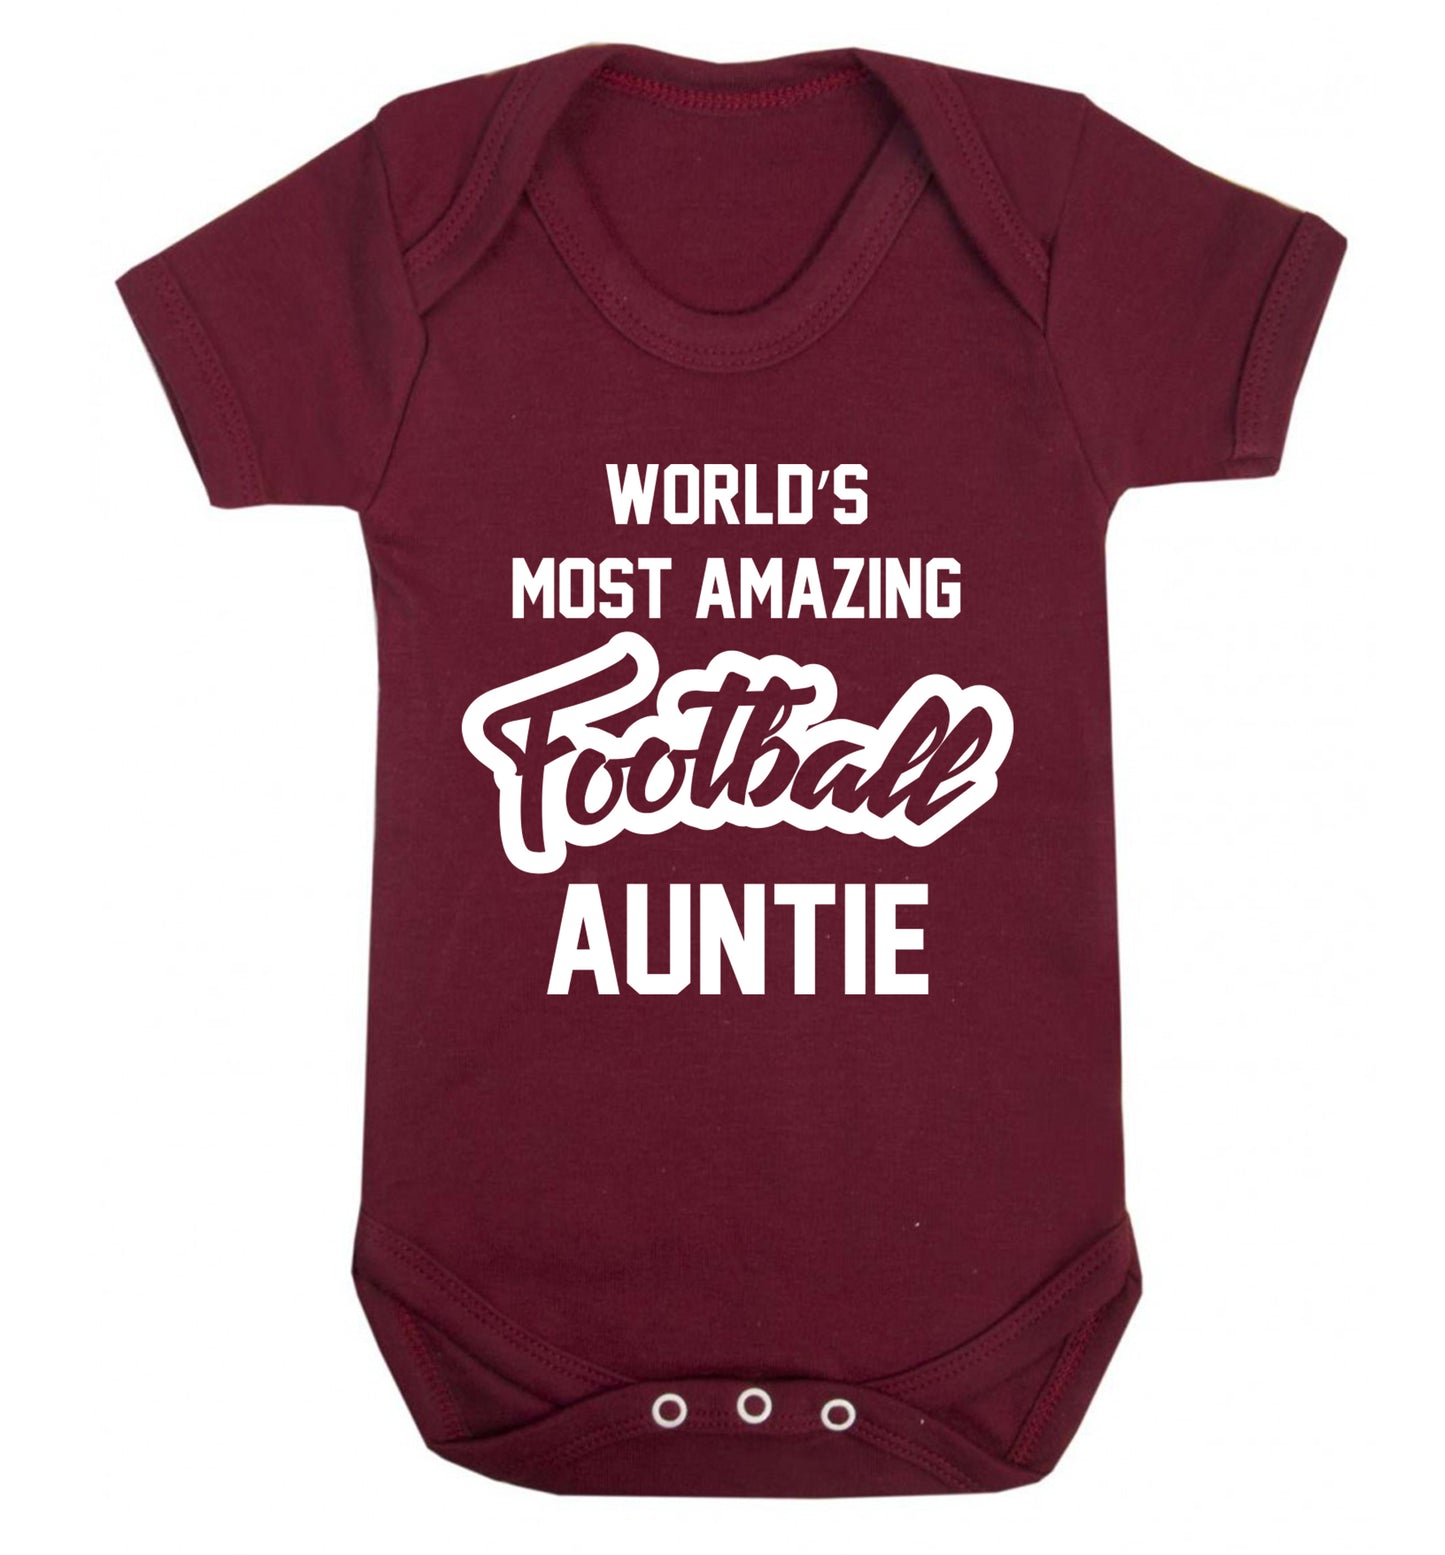 Worlds most amazing football auntie Baby Vest maroon 18-24 months